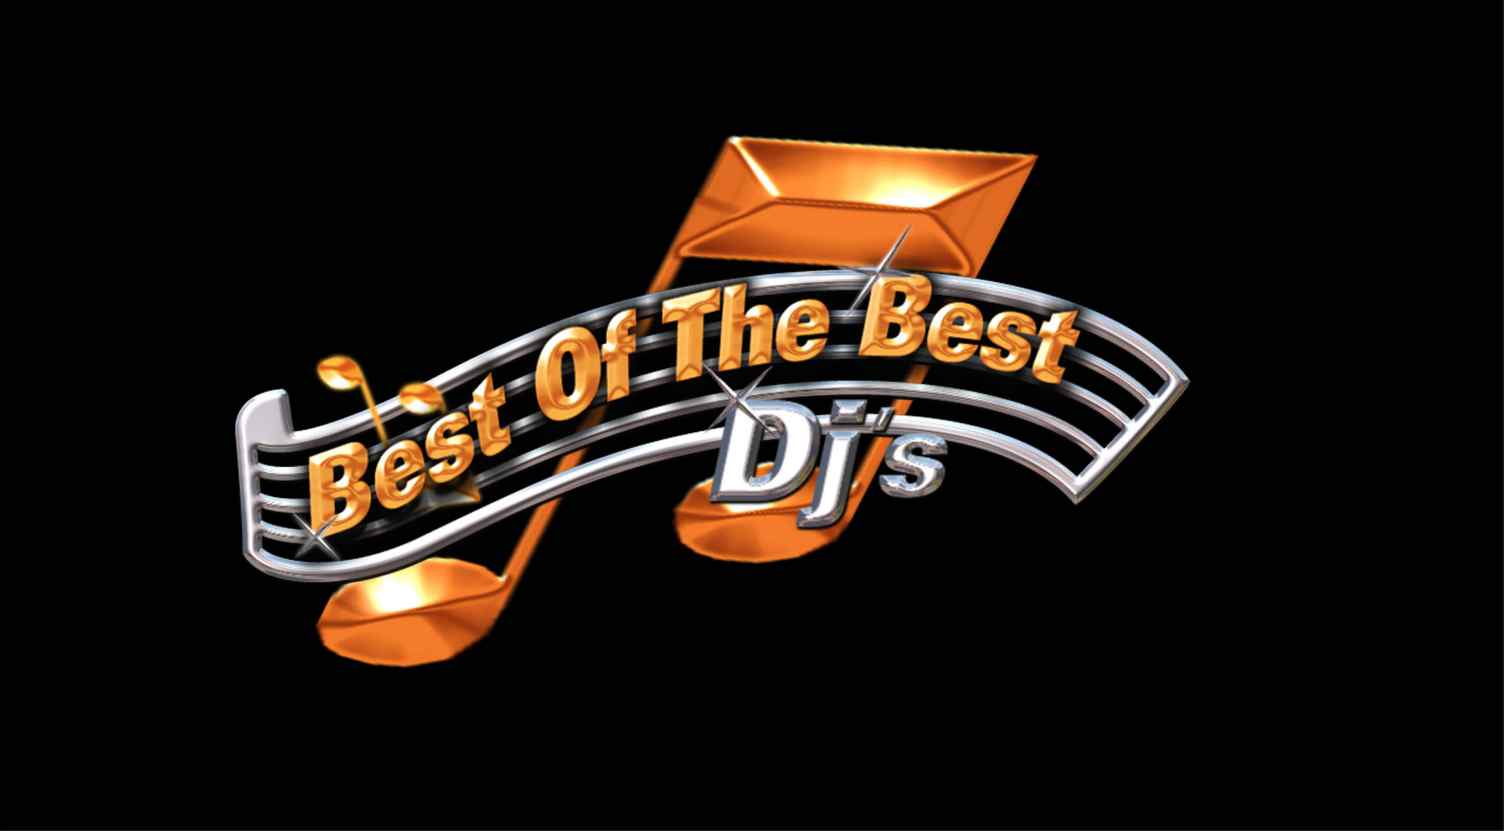 The Most award winning DJ Company in Las Vegas -- Best of the Best DJ's